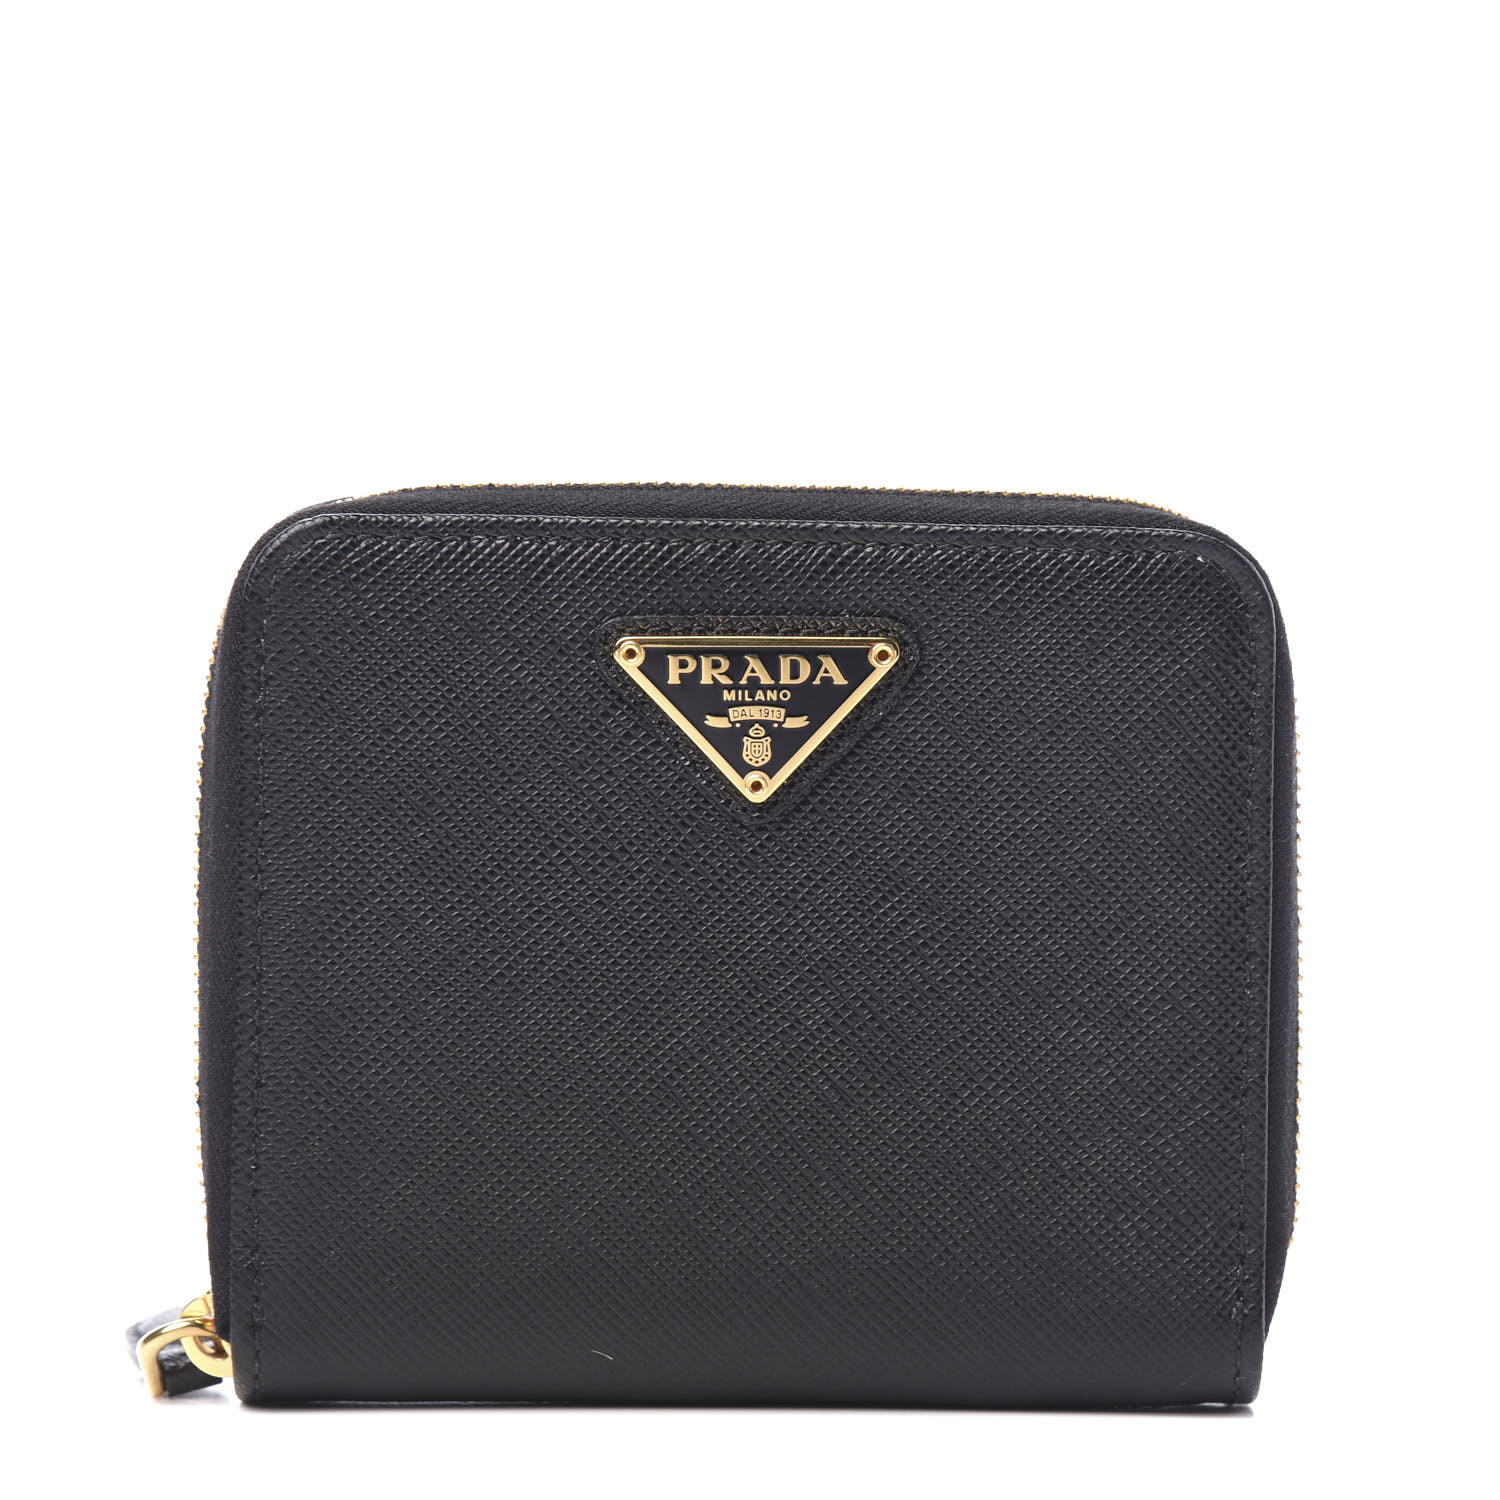 PRADA Saffiano Compact Zip Around Wallet Black 590190 | FASHIONPHILE